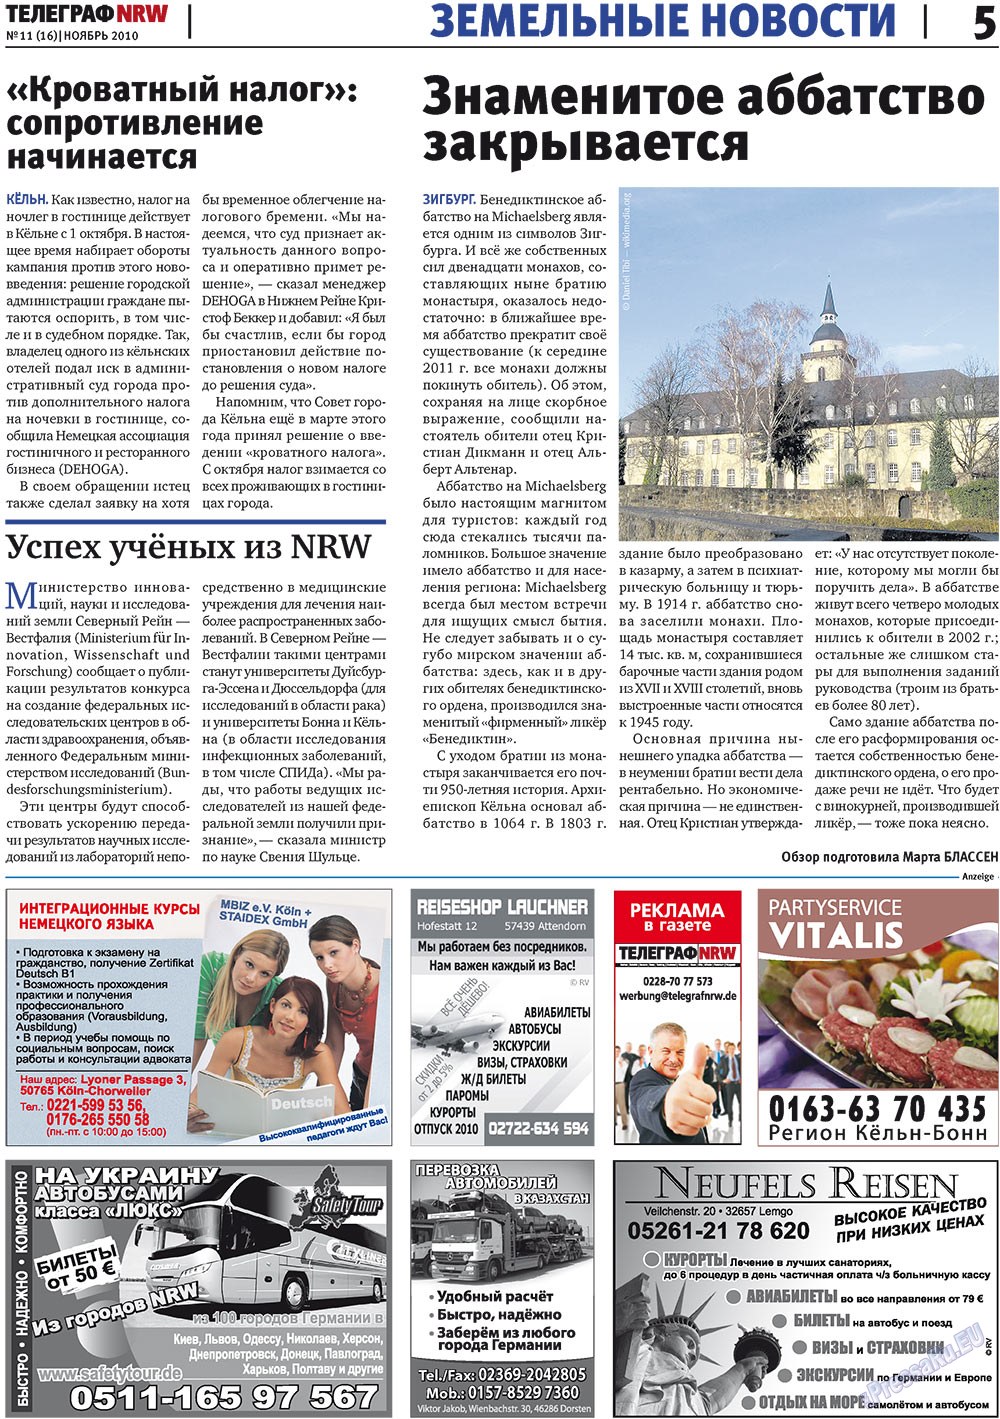 Телеграф NRW, газета. 2010 №11 стр.5